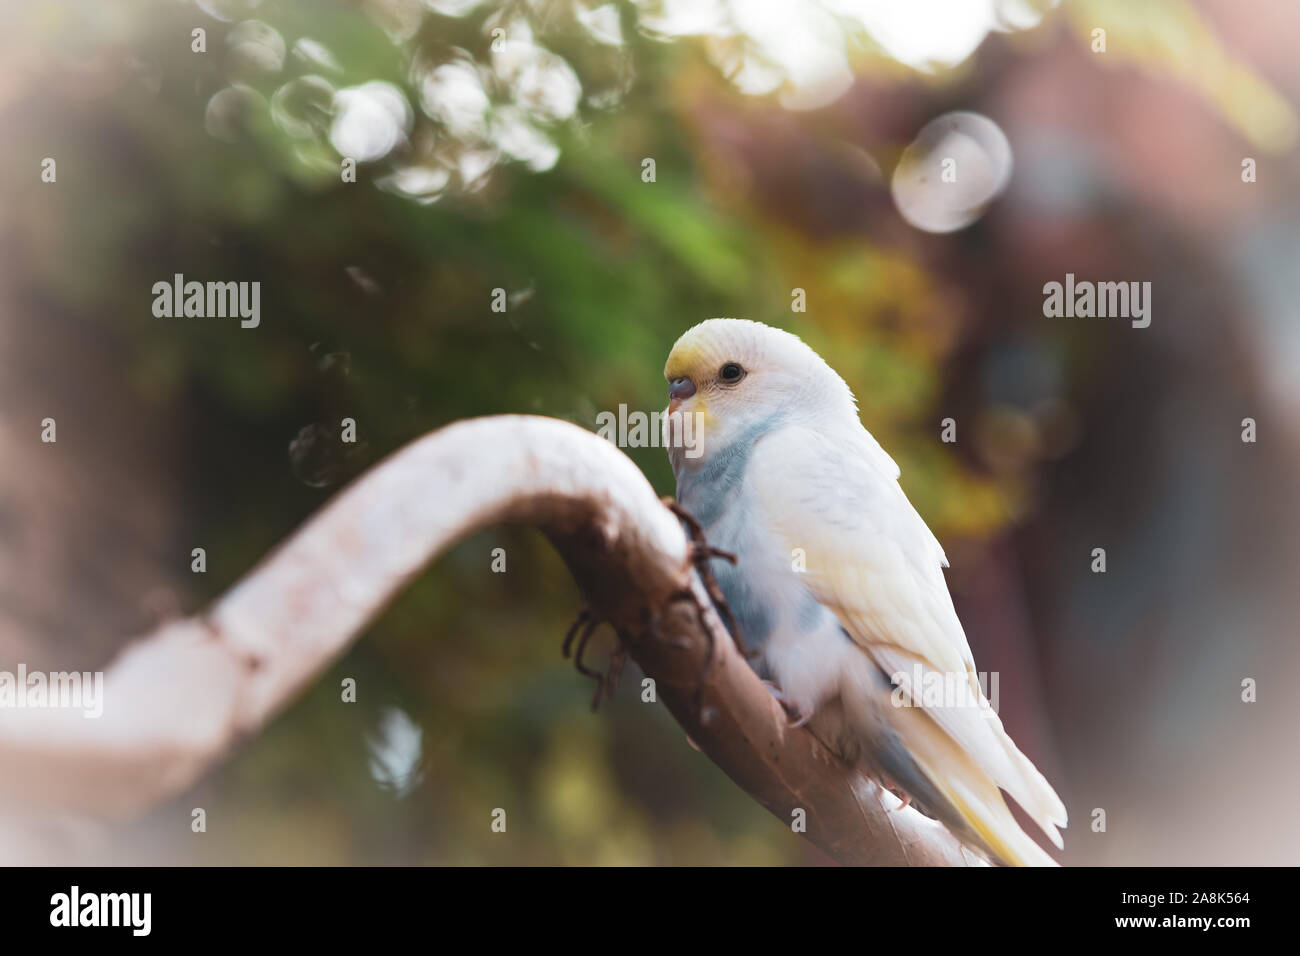 beautiful budgie parakeet bird sitting on tree branch image Stock Photo